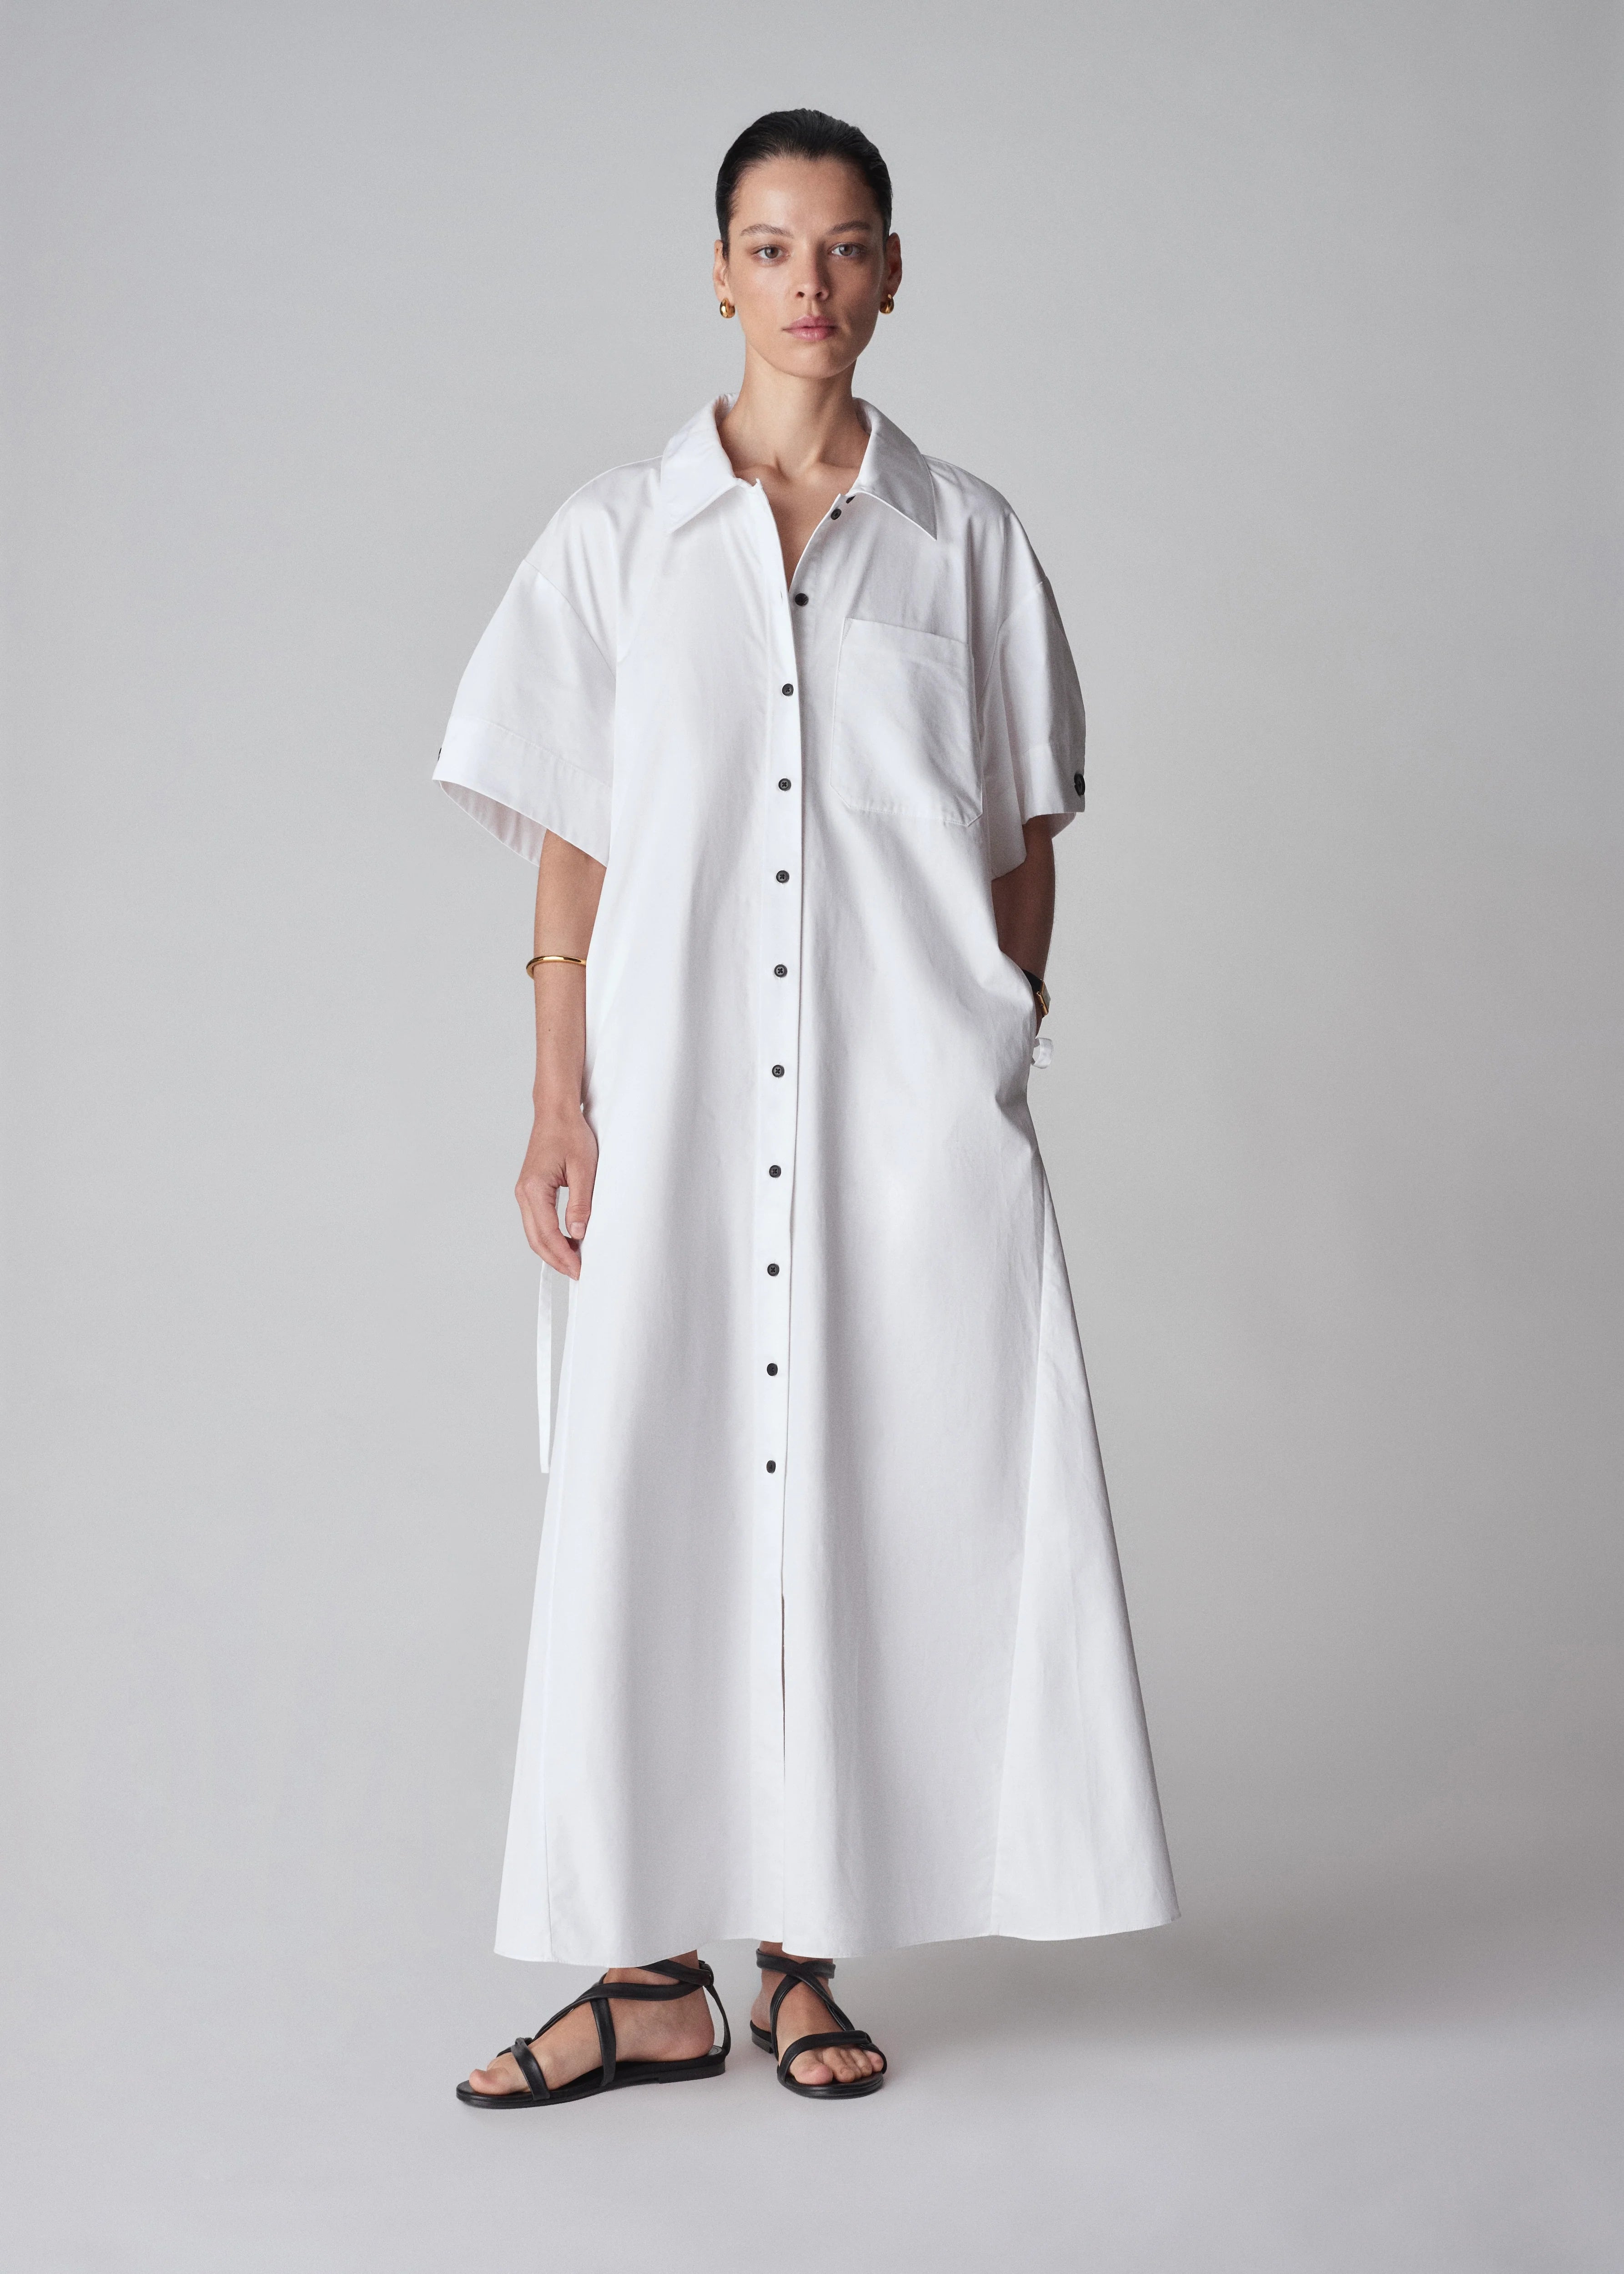 Short Sleeve Shirtdress in Cotton